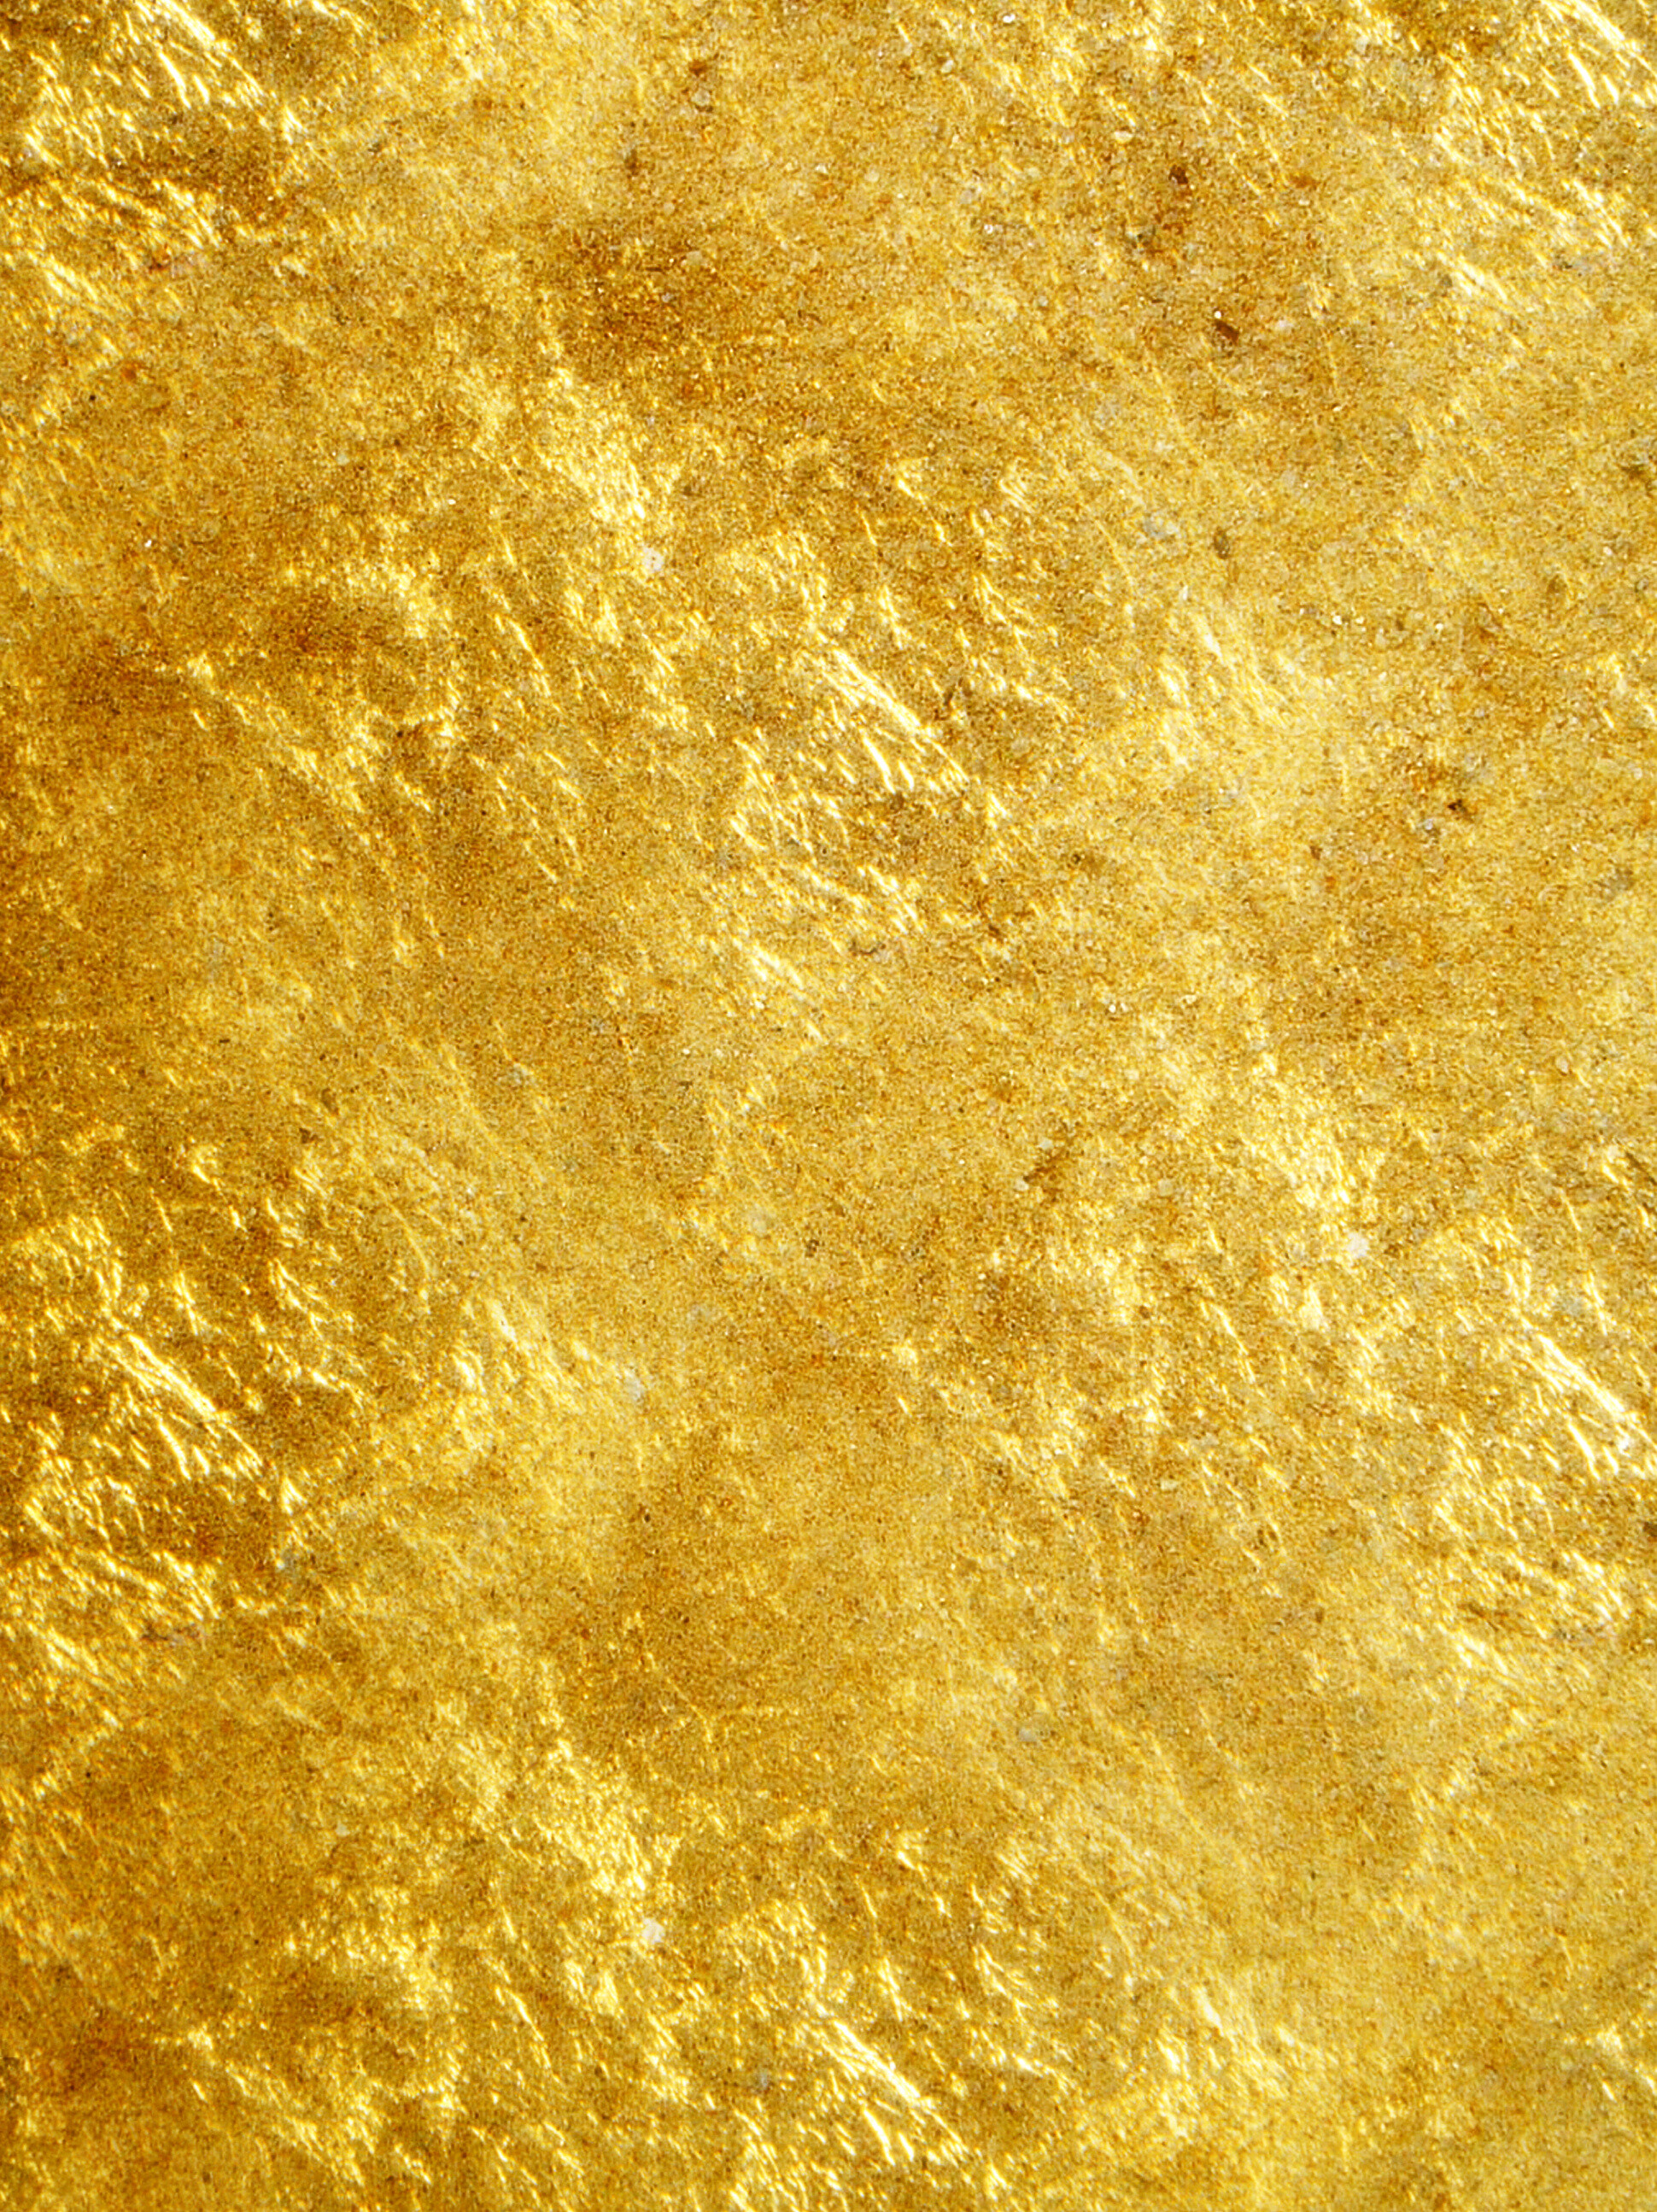 Gold Foil: Metalized paper, Chaotic pattern. 1940x2590 HD Wallpaper.